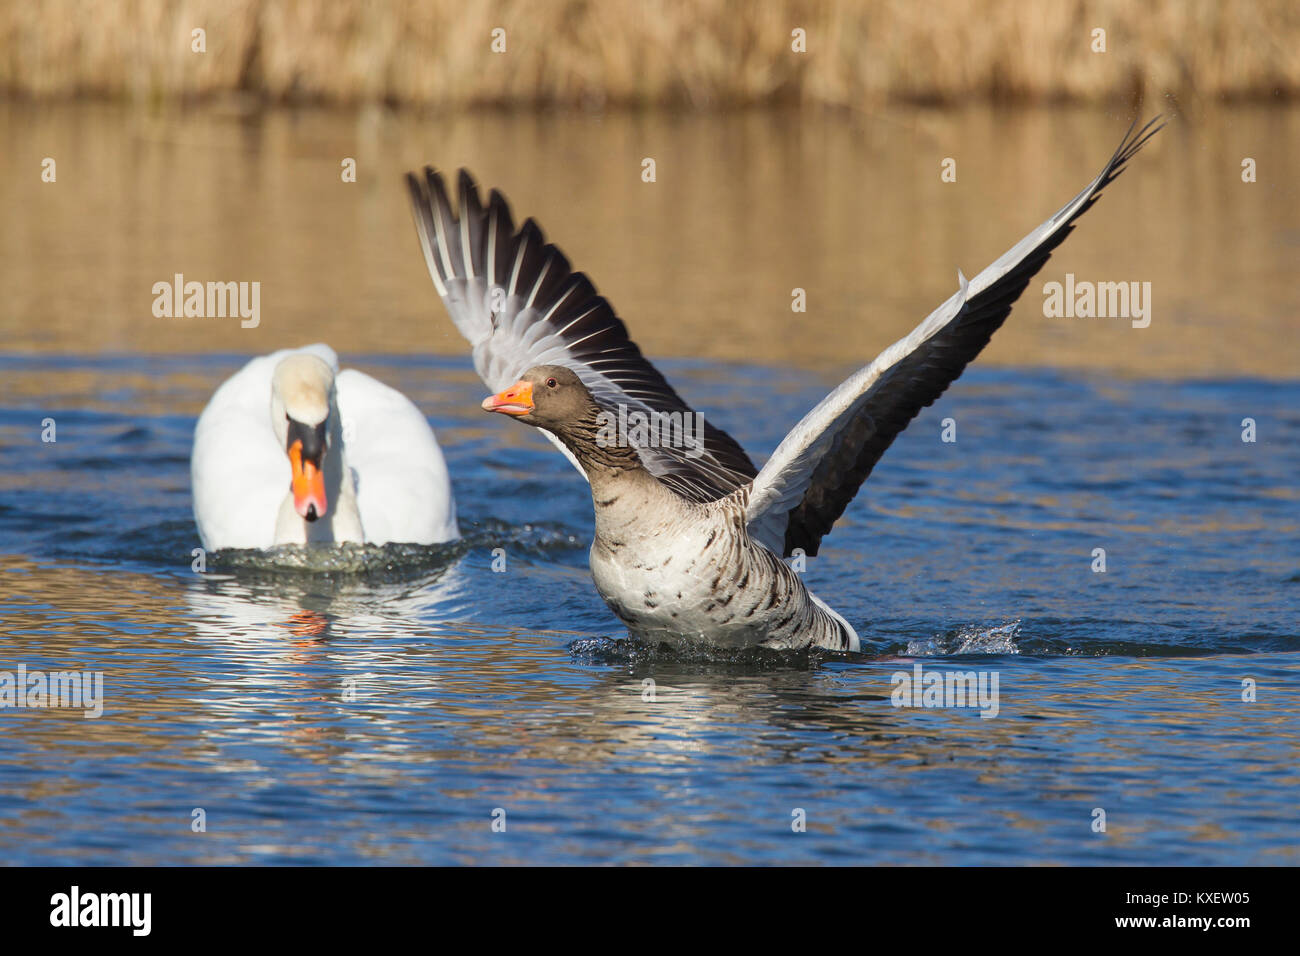 Territorial mute swan (Cygnus olor) chasing away greylag goose / graylag goose (Anser anser) swimming in lake Stock Photo